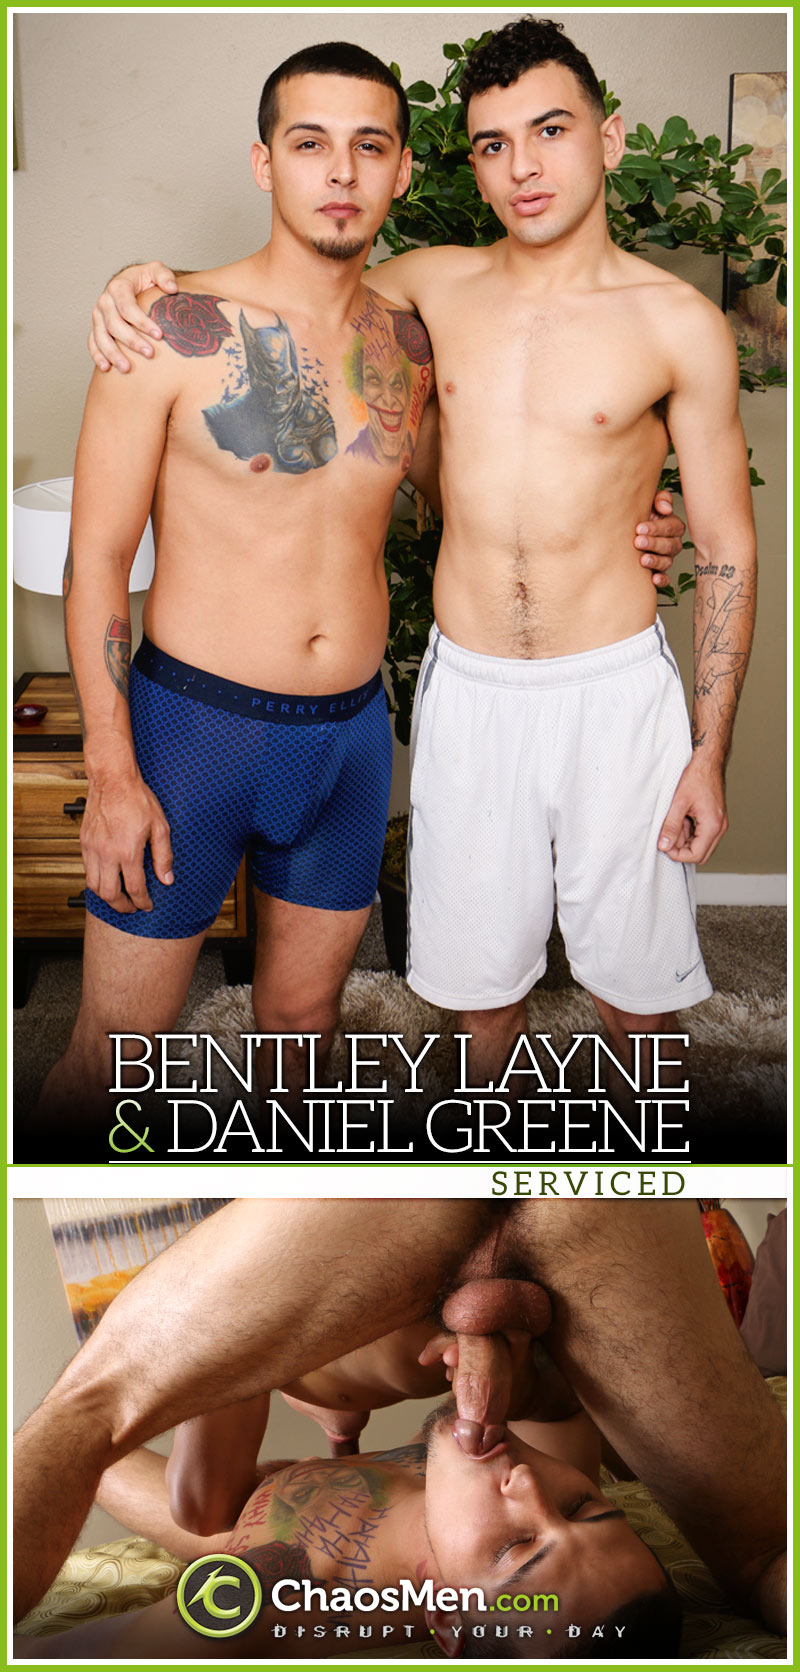 Daniel Greene and Bentley Layne 'Serviced' at ChaosMen